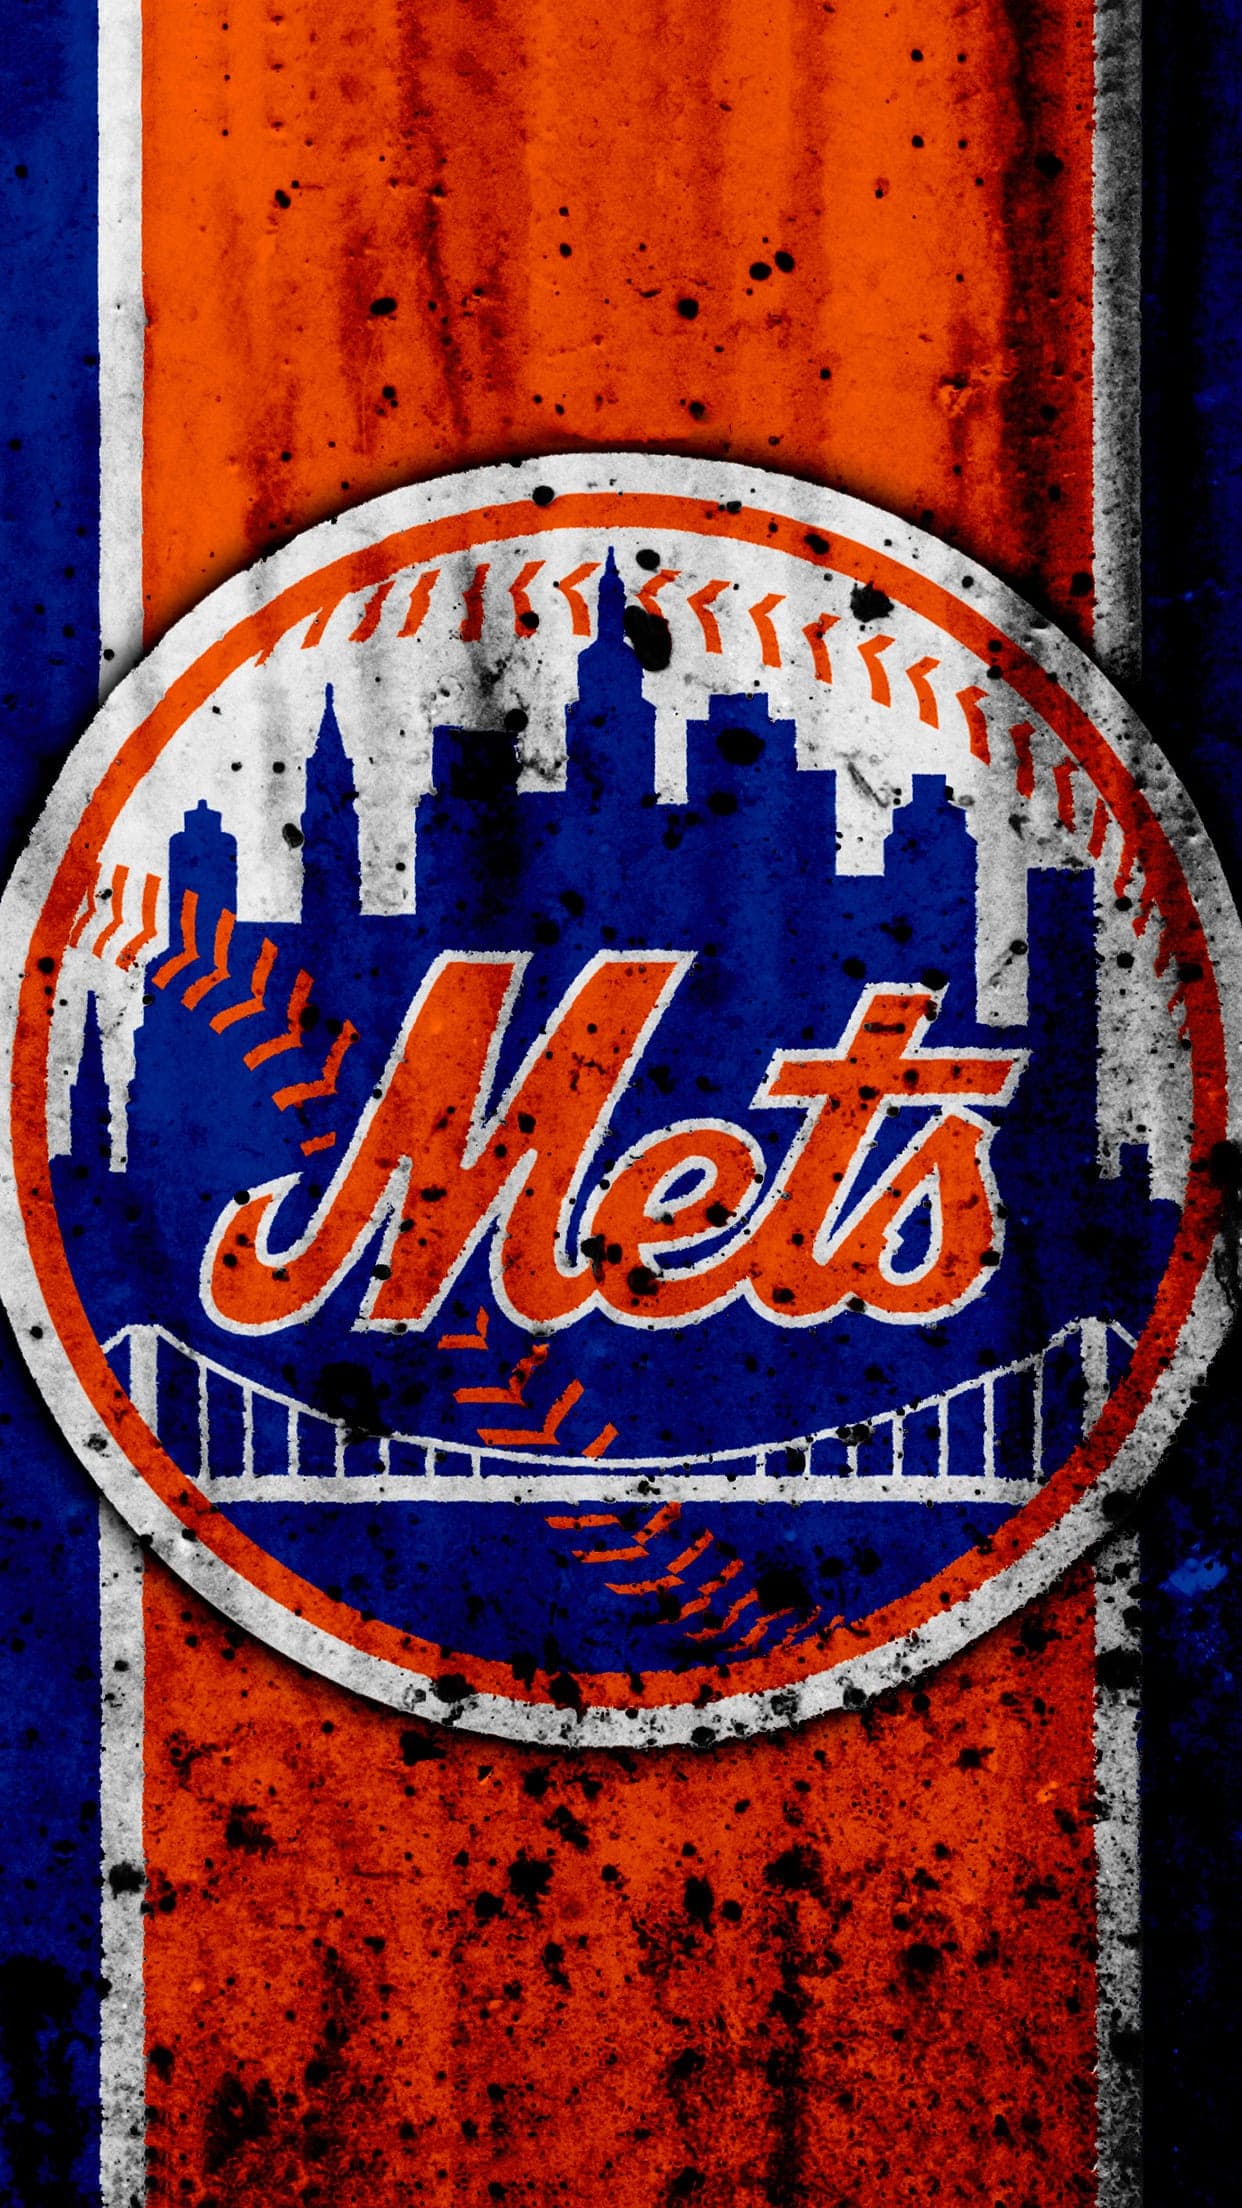 New York Mets  AllStar wallpapers for AllStar players  Facebook